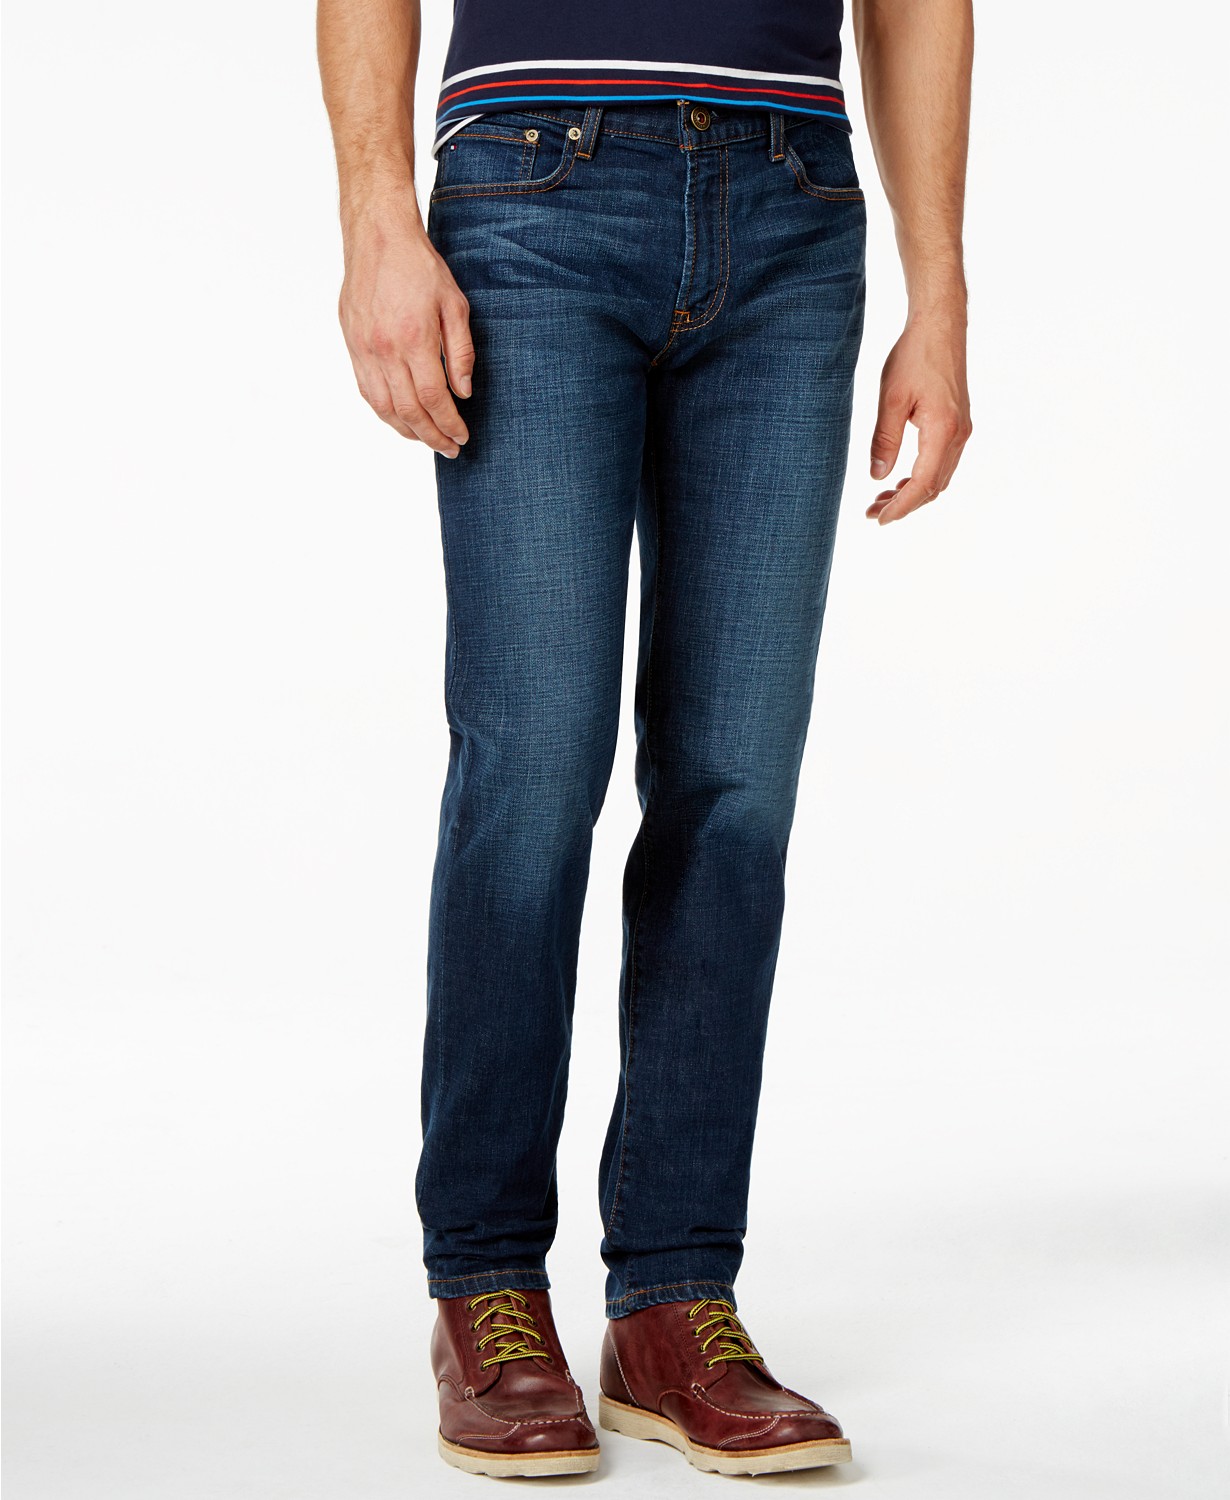 Tommy Hilfiger Mens Slim-Fit Stretch Jeans